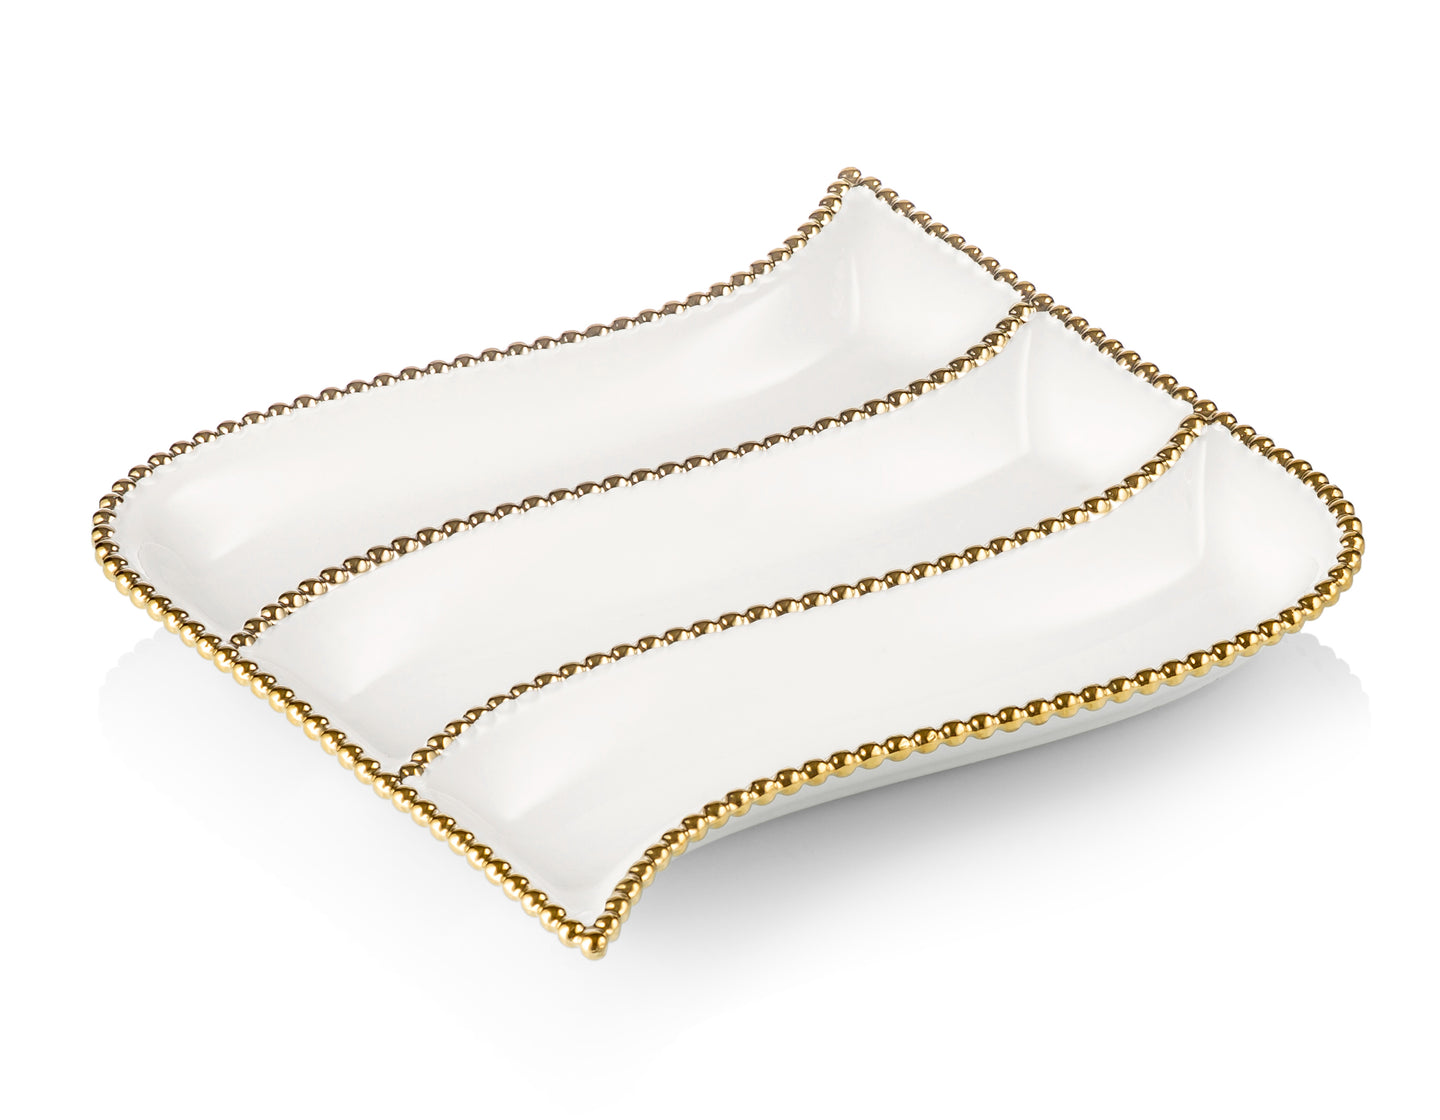 White Porcelain Cracker Dish with Gold Beaded Design